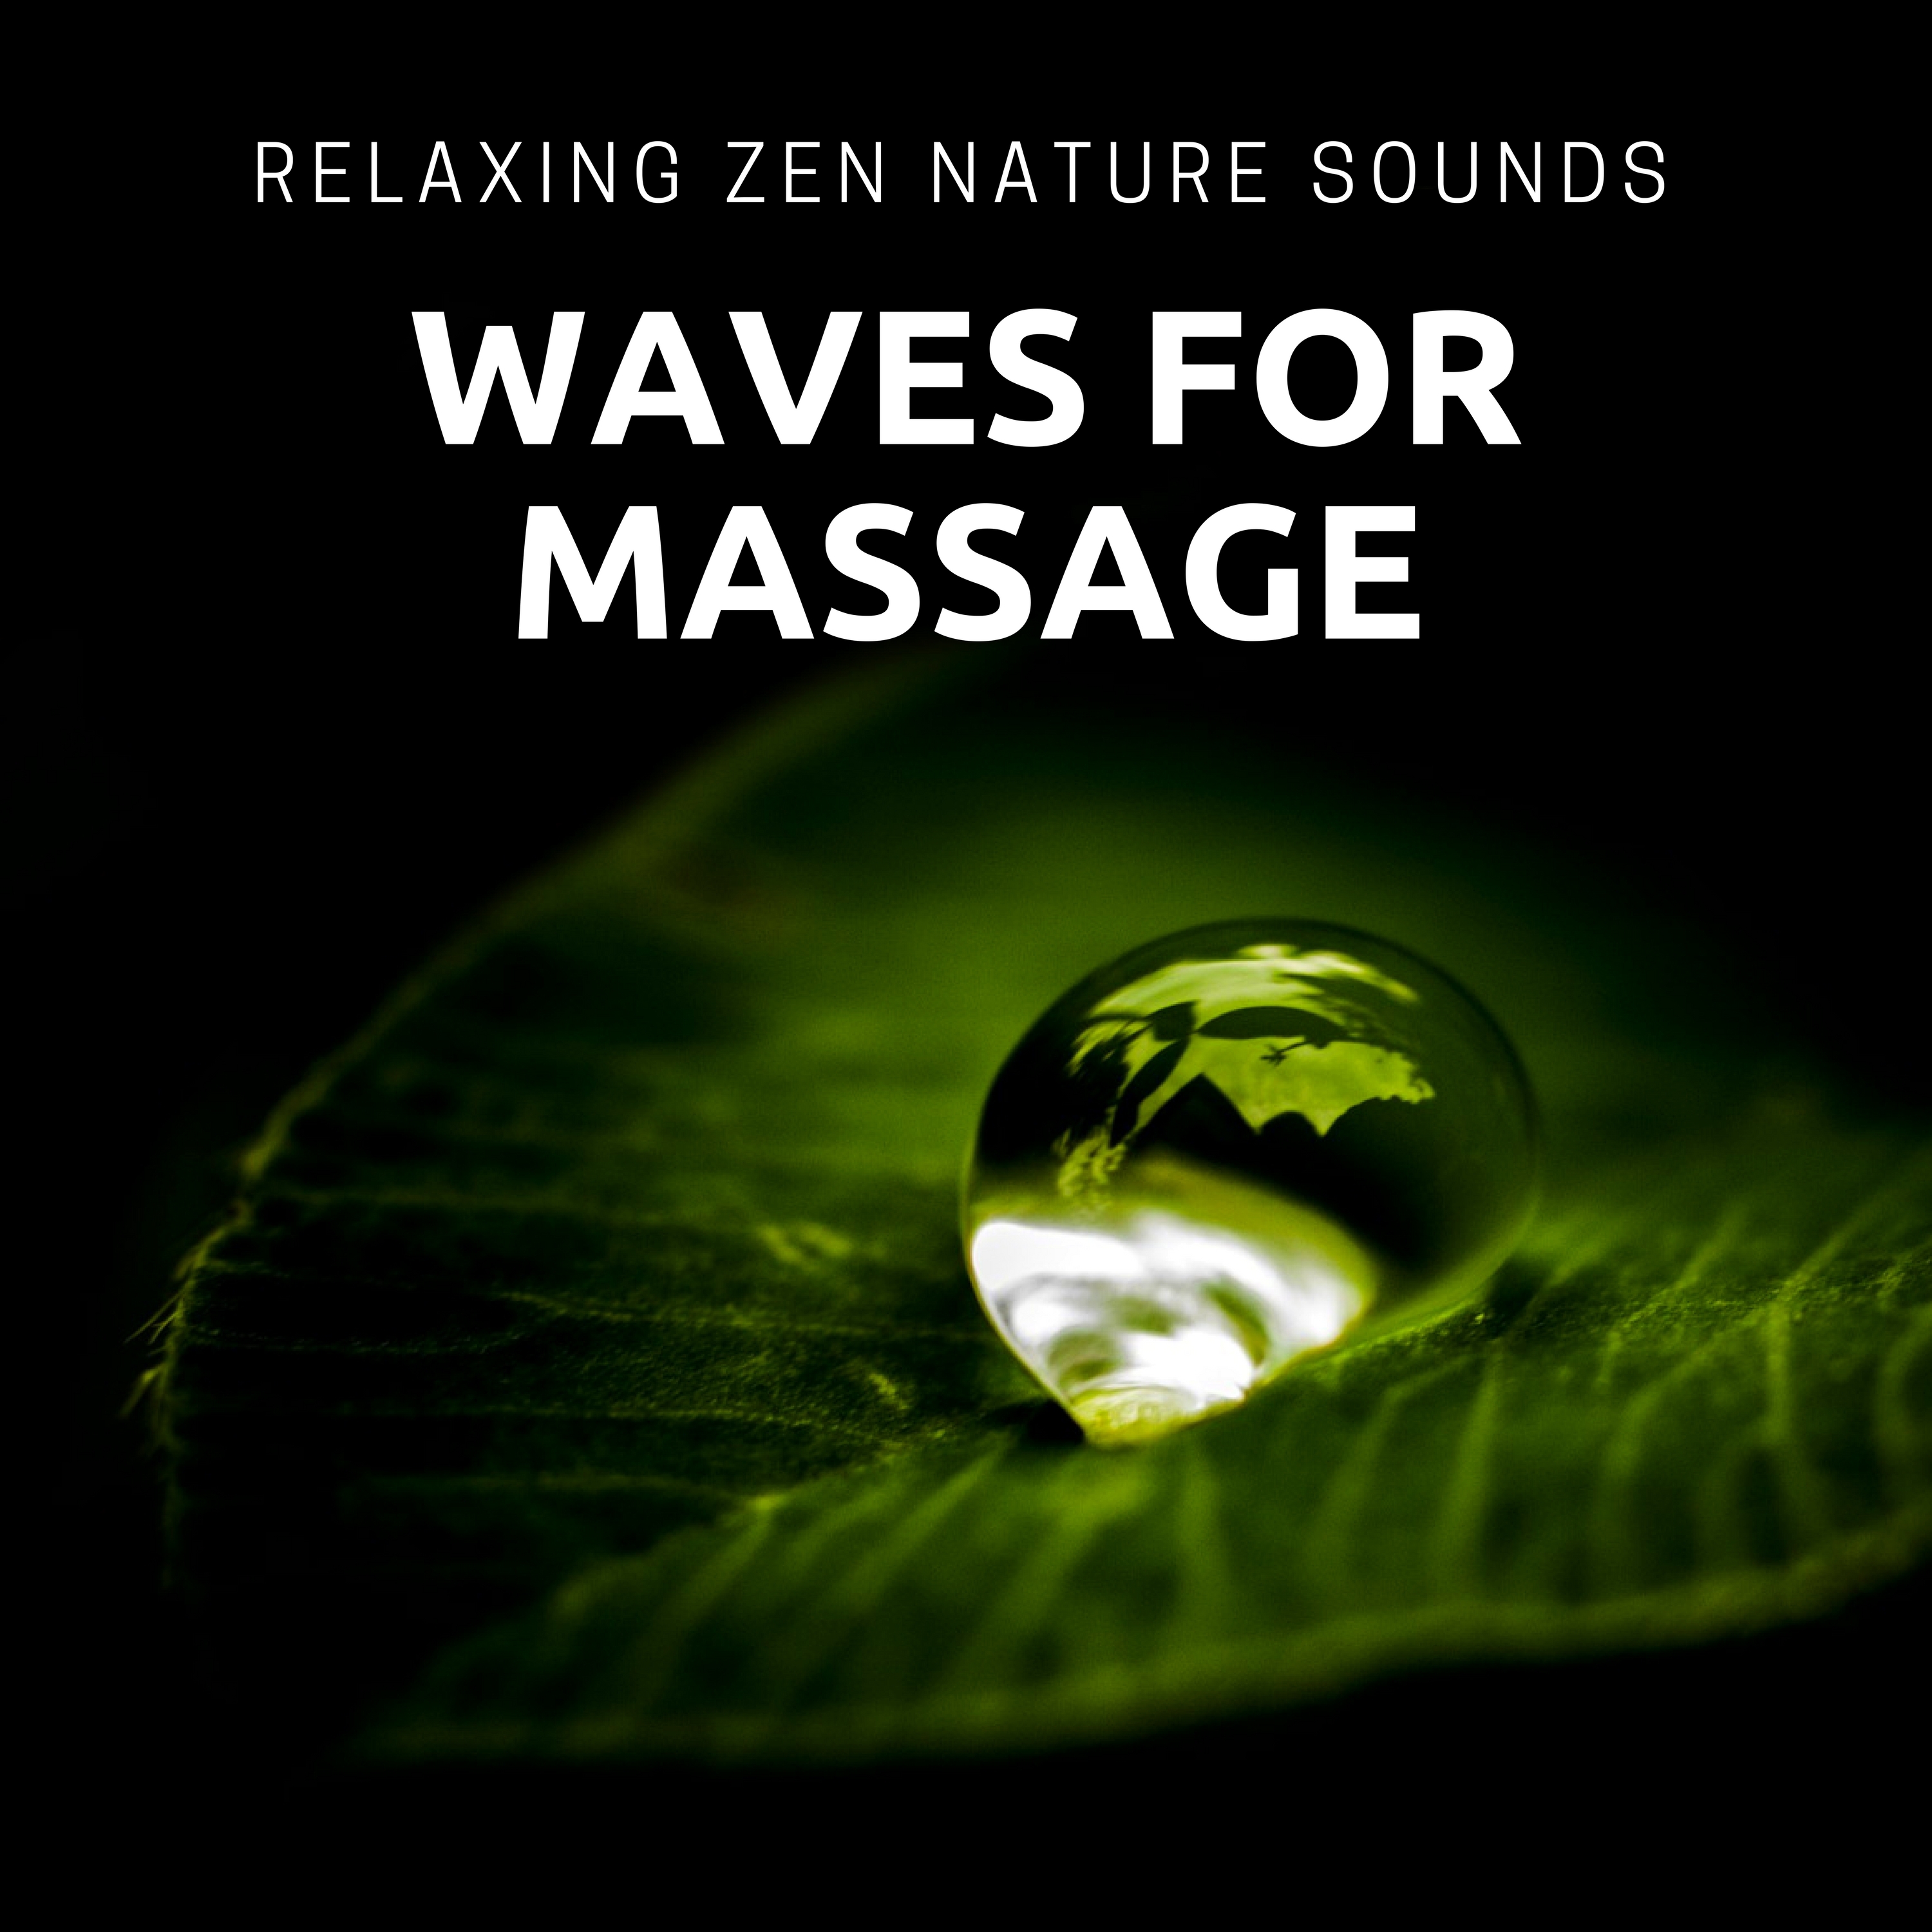 Waves for Massage